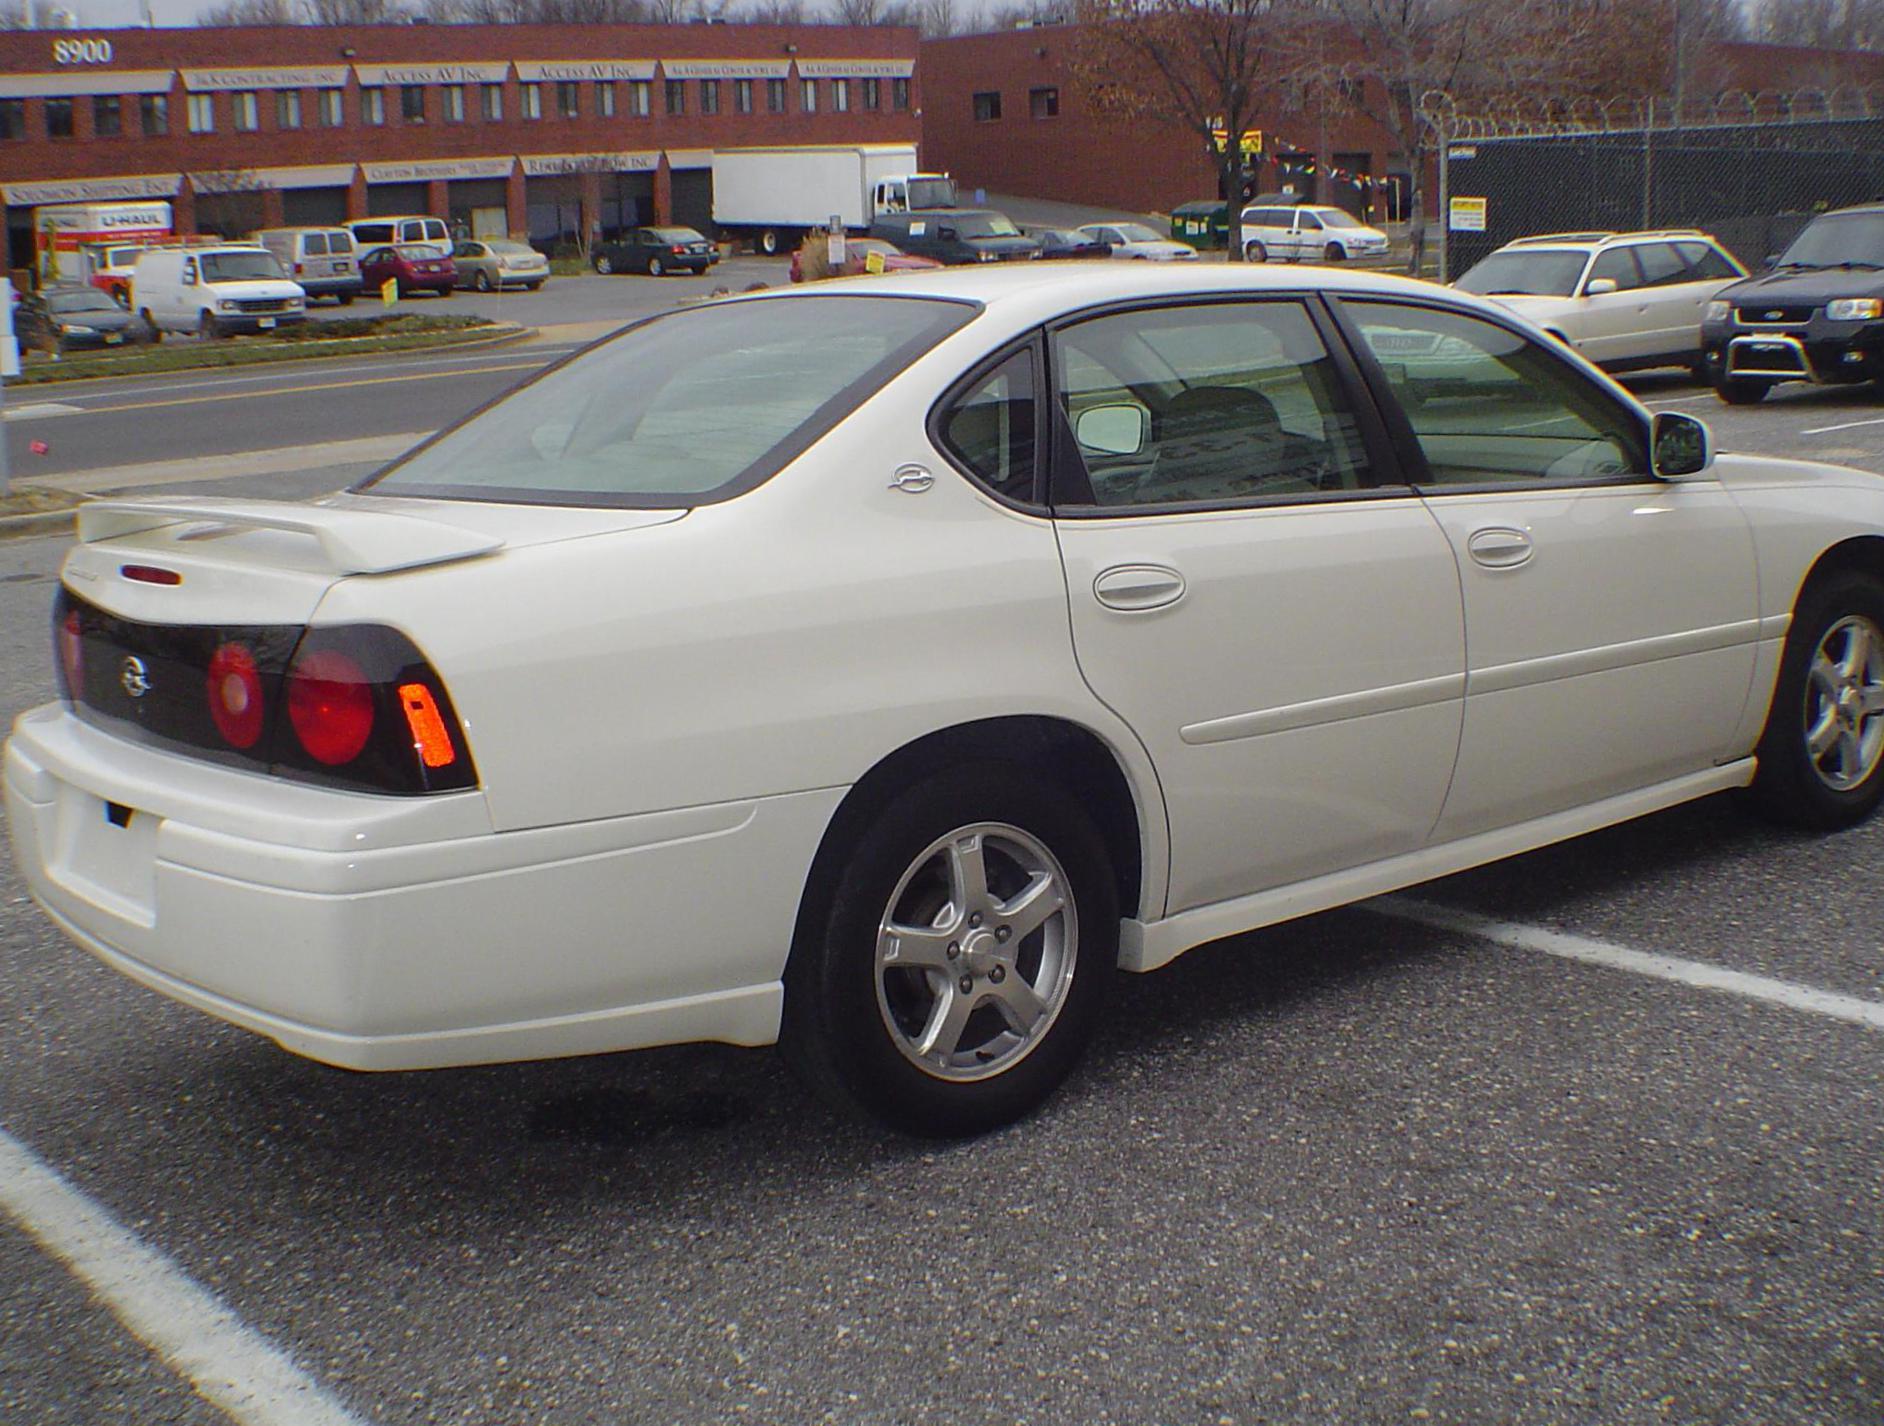 Impala Chevrolet configuration suv